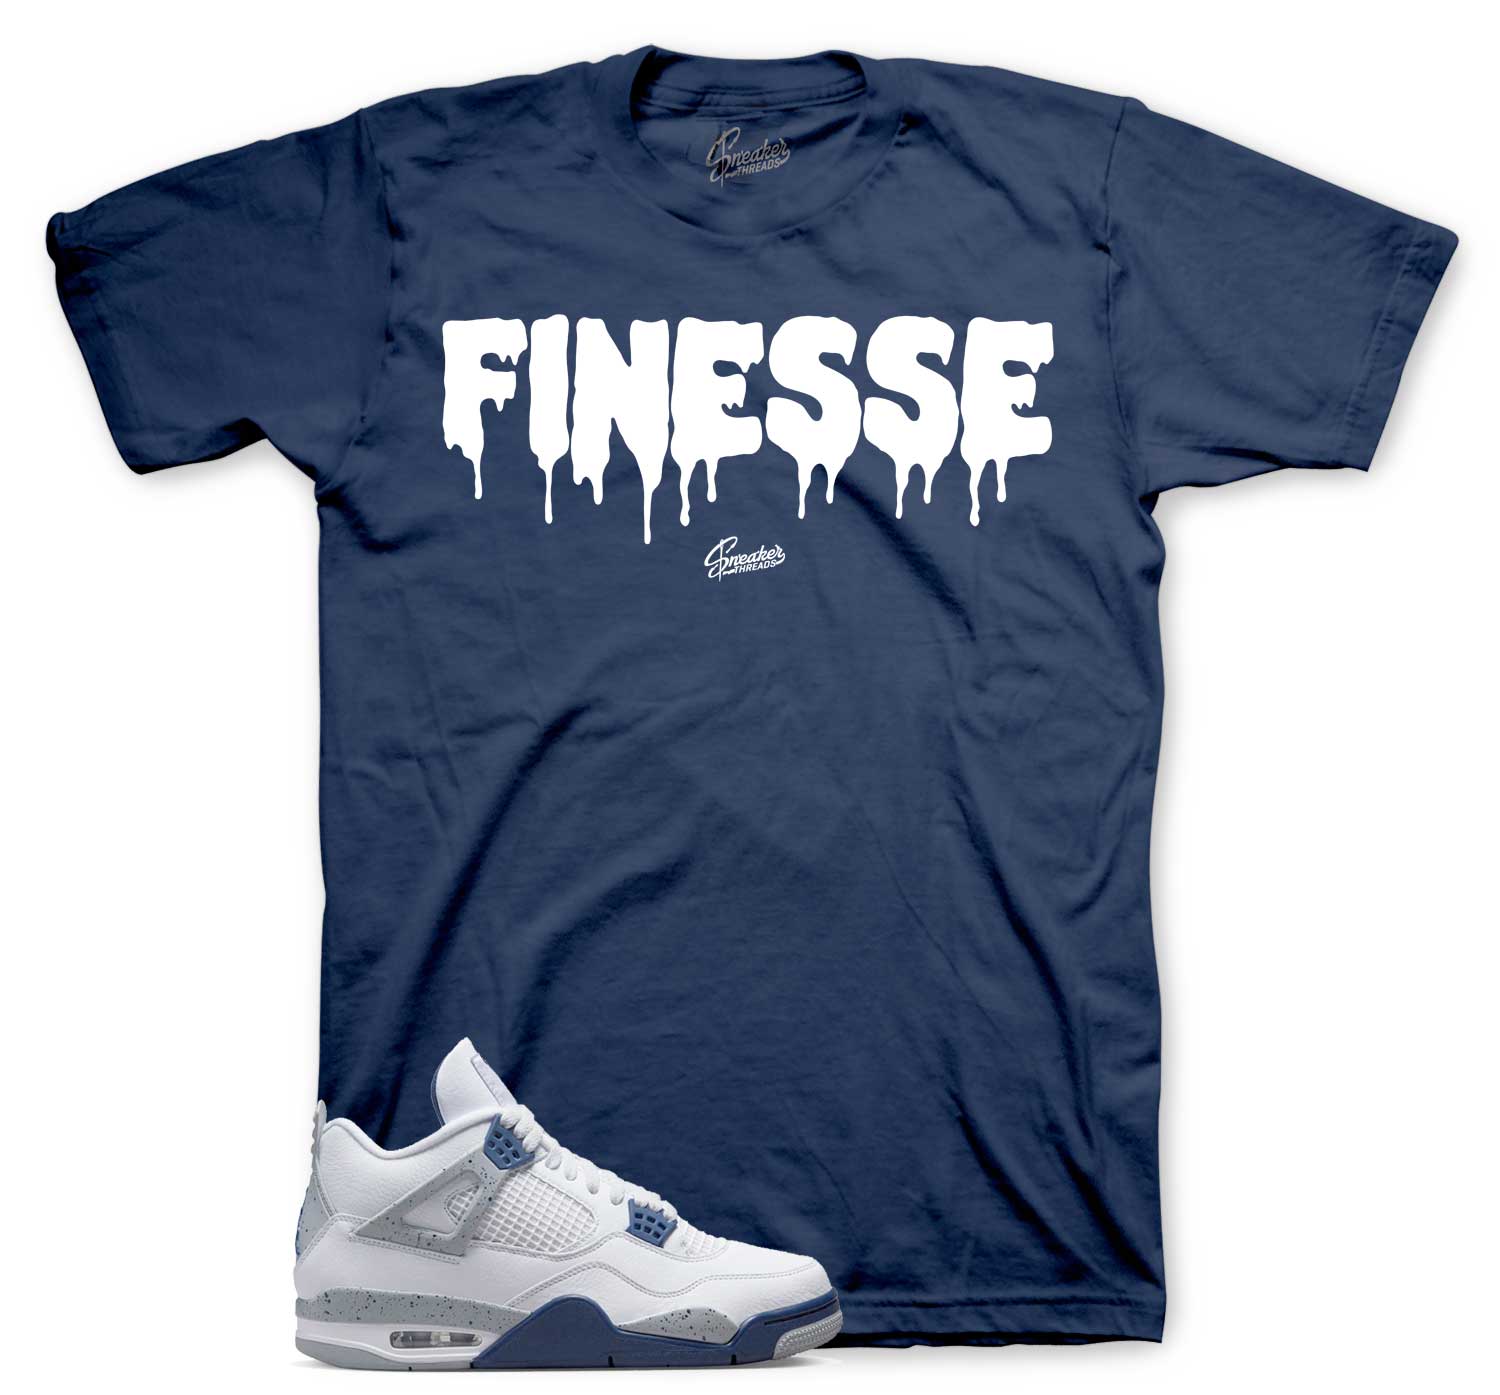 Finesse T-Shirt - Retro 4 Midnight Navy